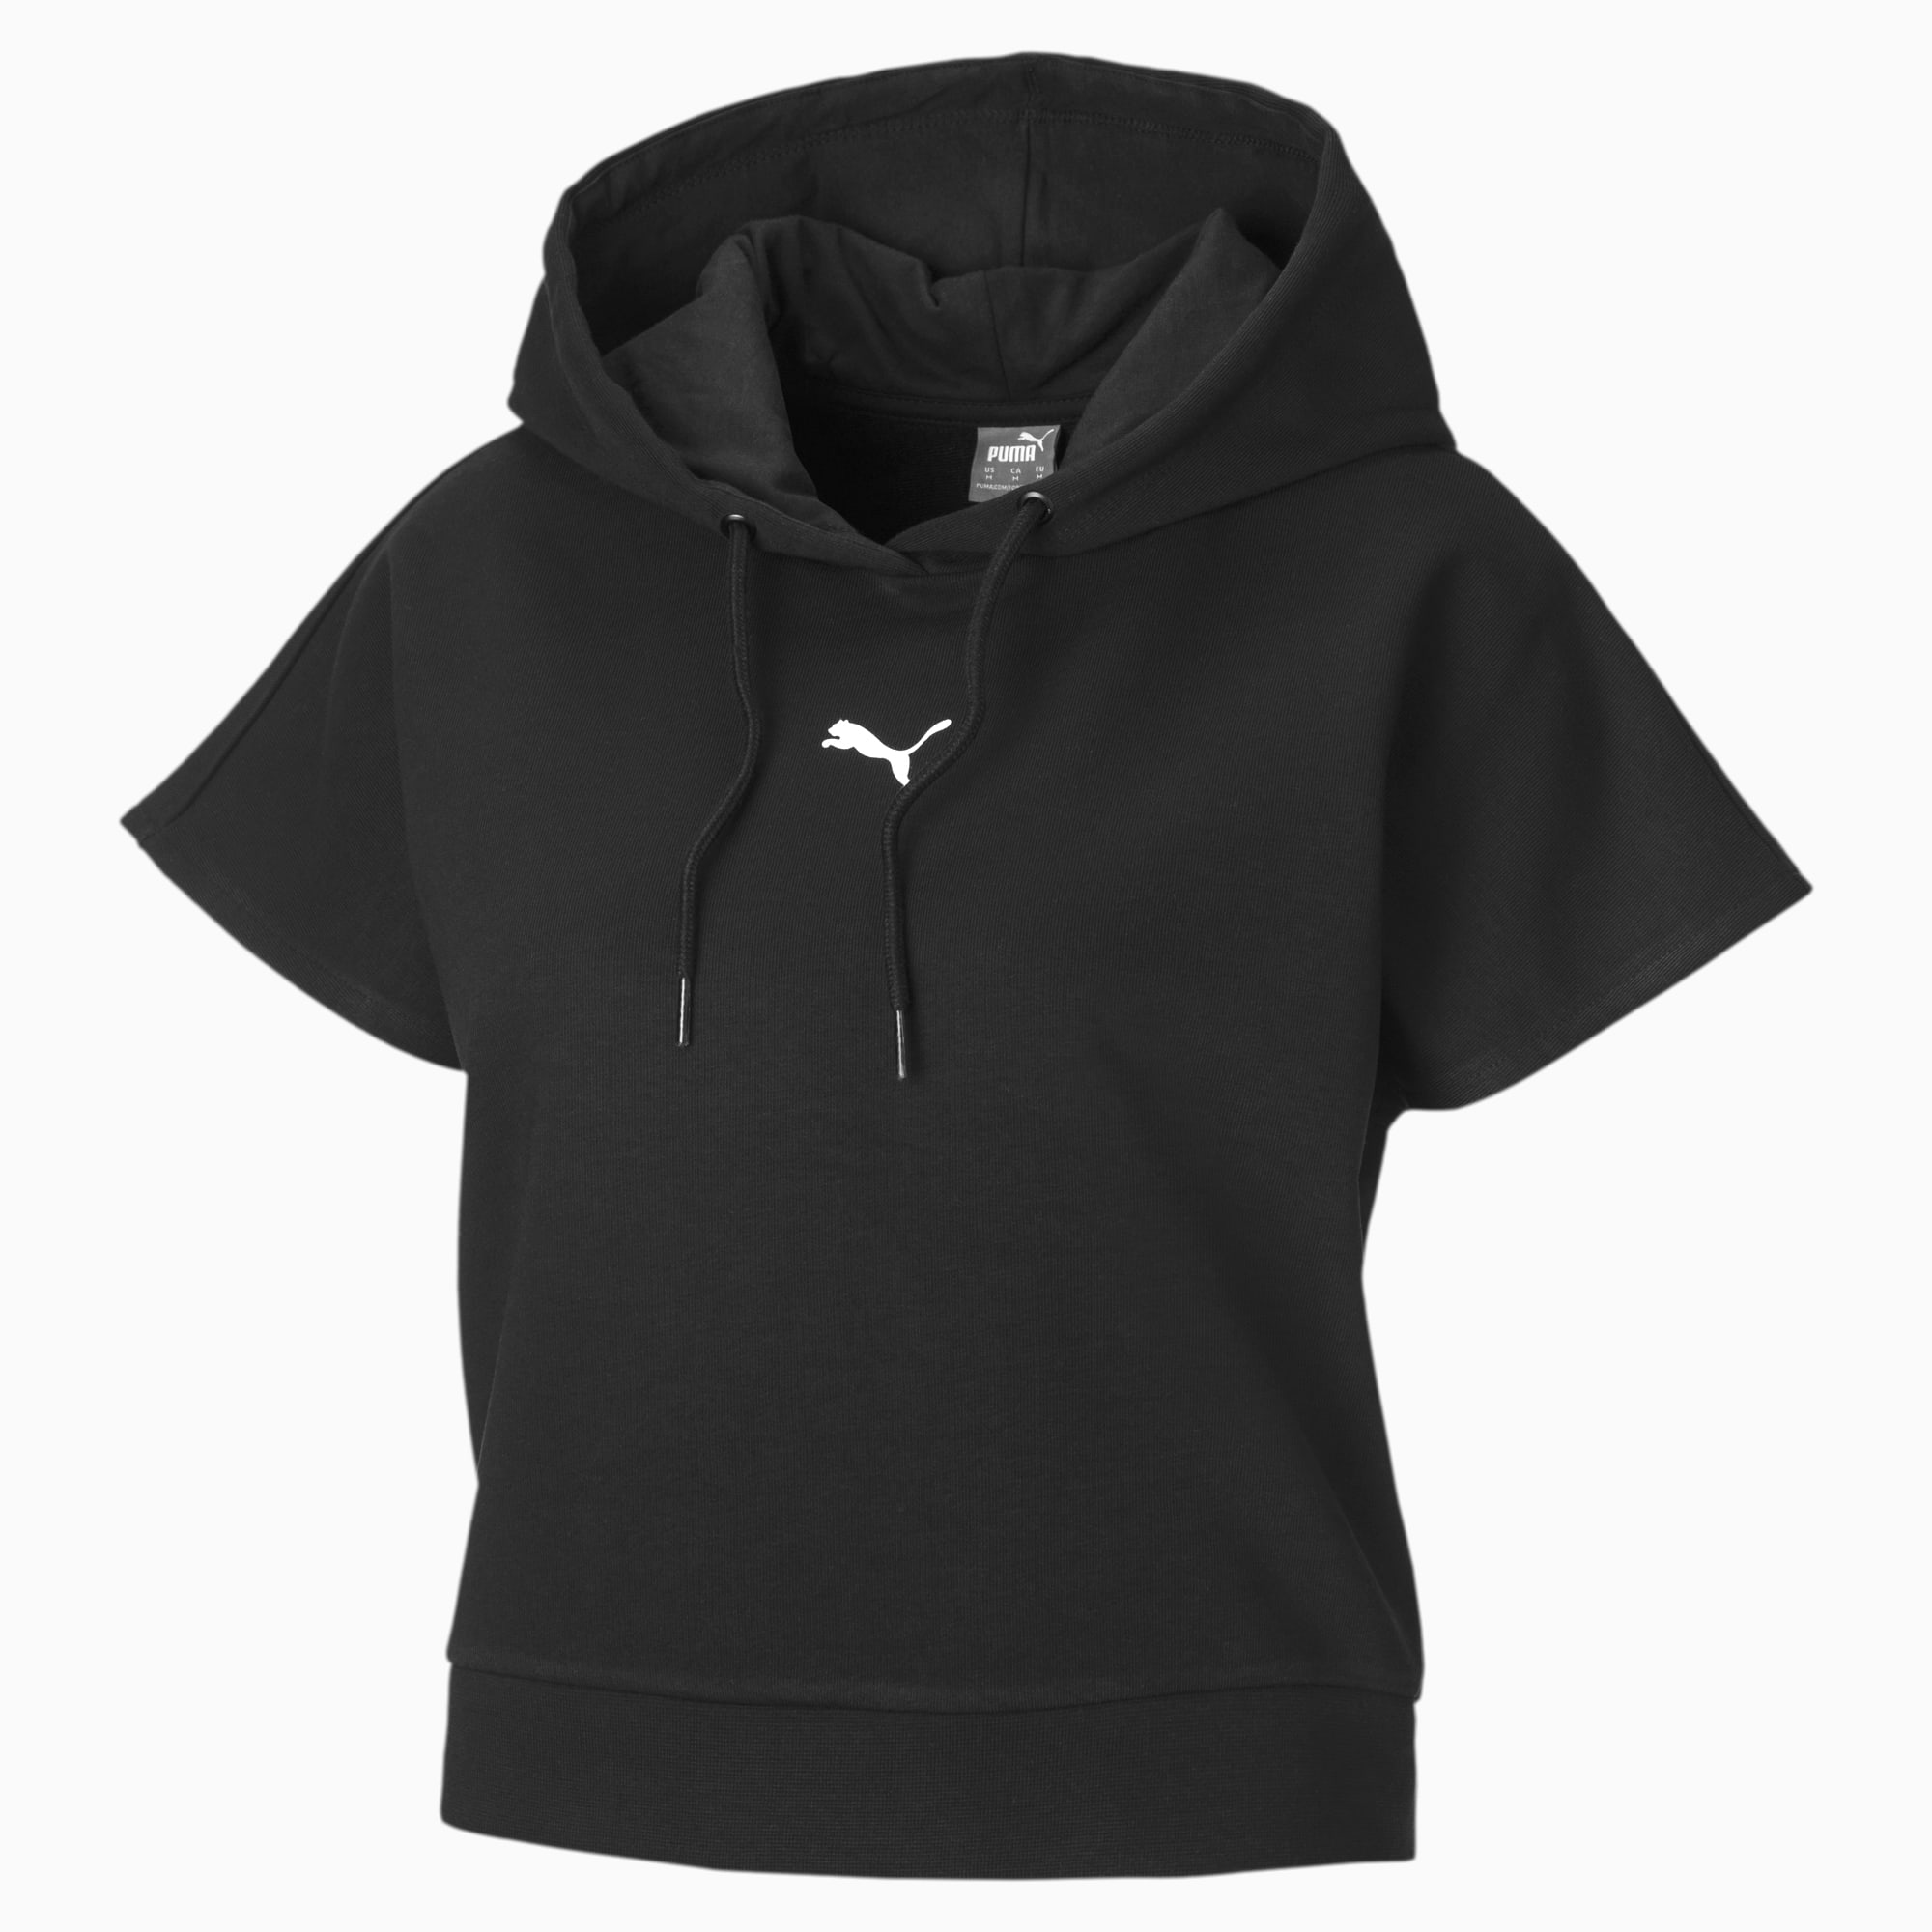 puma black hoodie womens